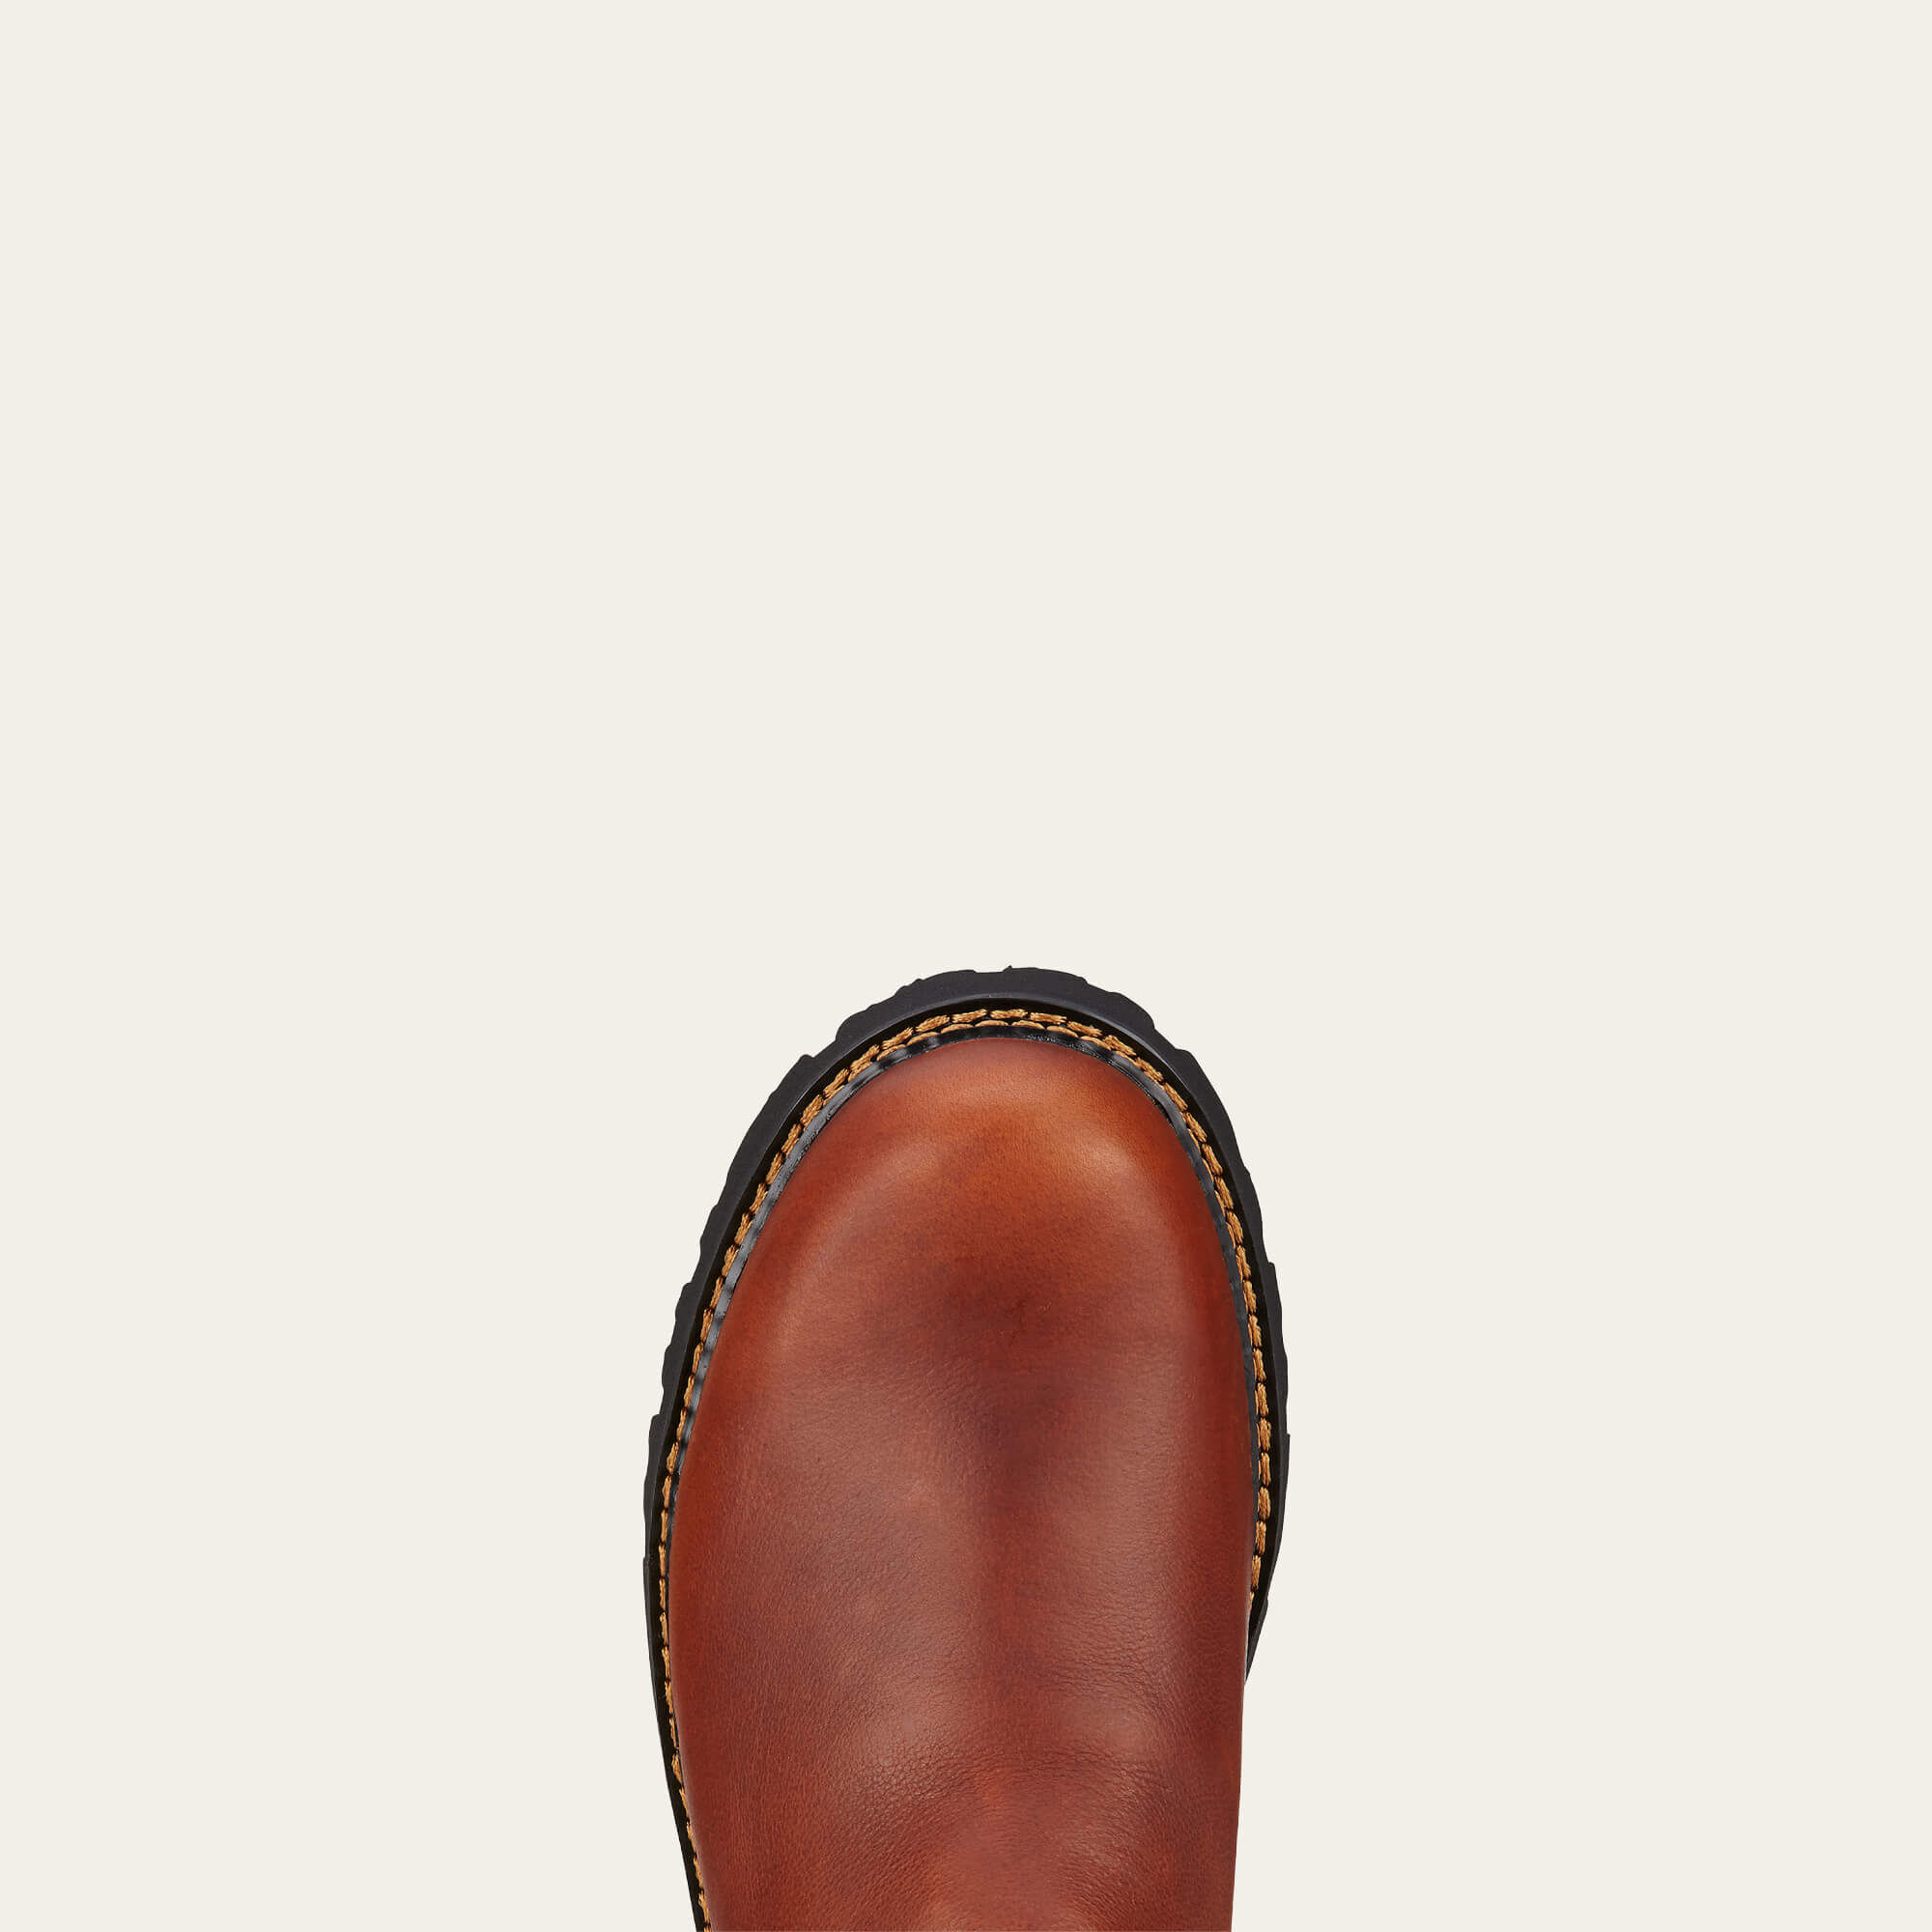 Men's Spot Hog Boots in Peanut, Size: 7.5 D / Medium by Ariat